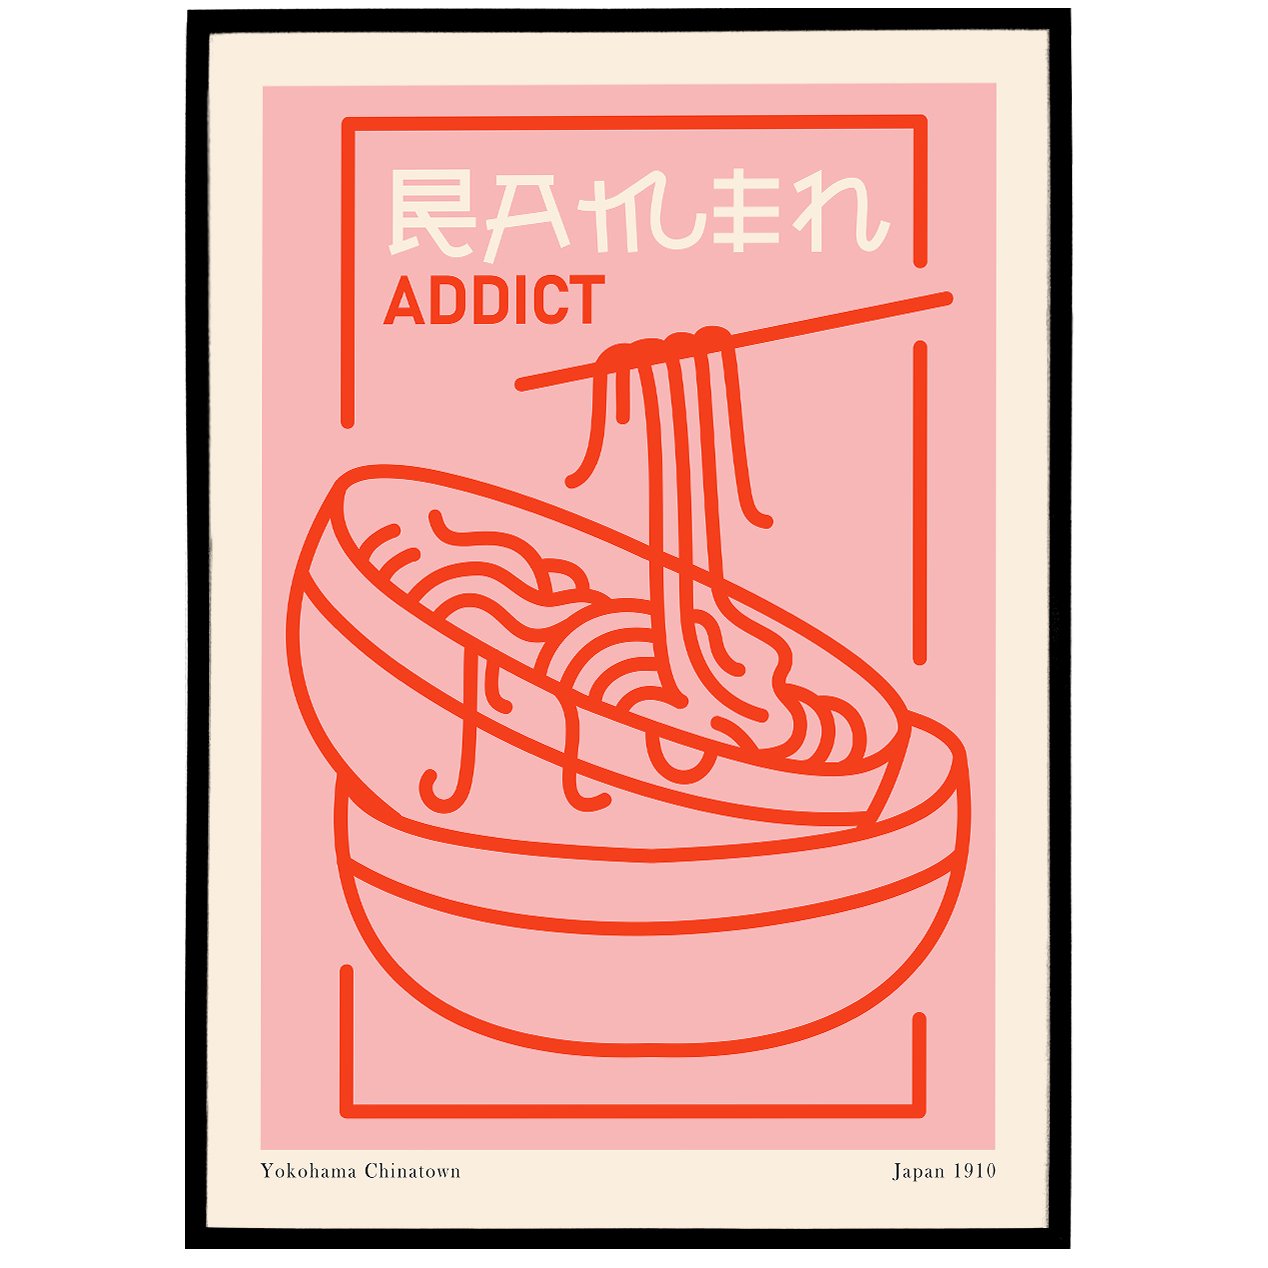 Ramen Addict - Foodie Poster